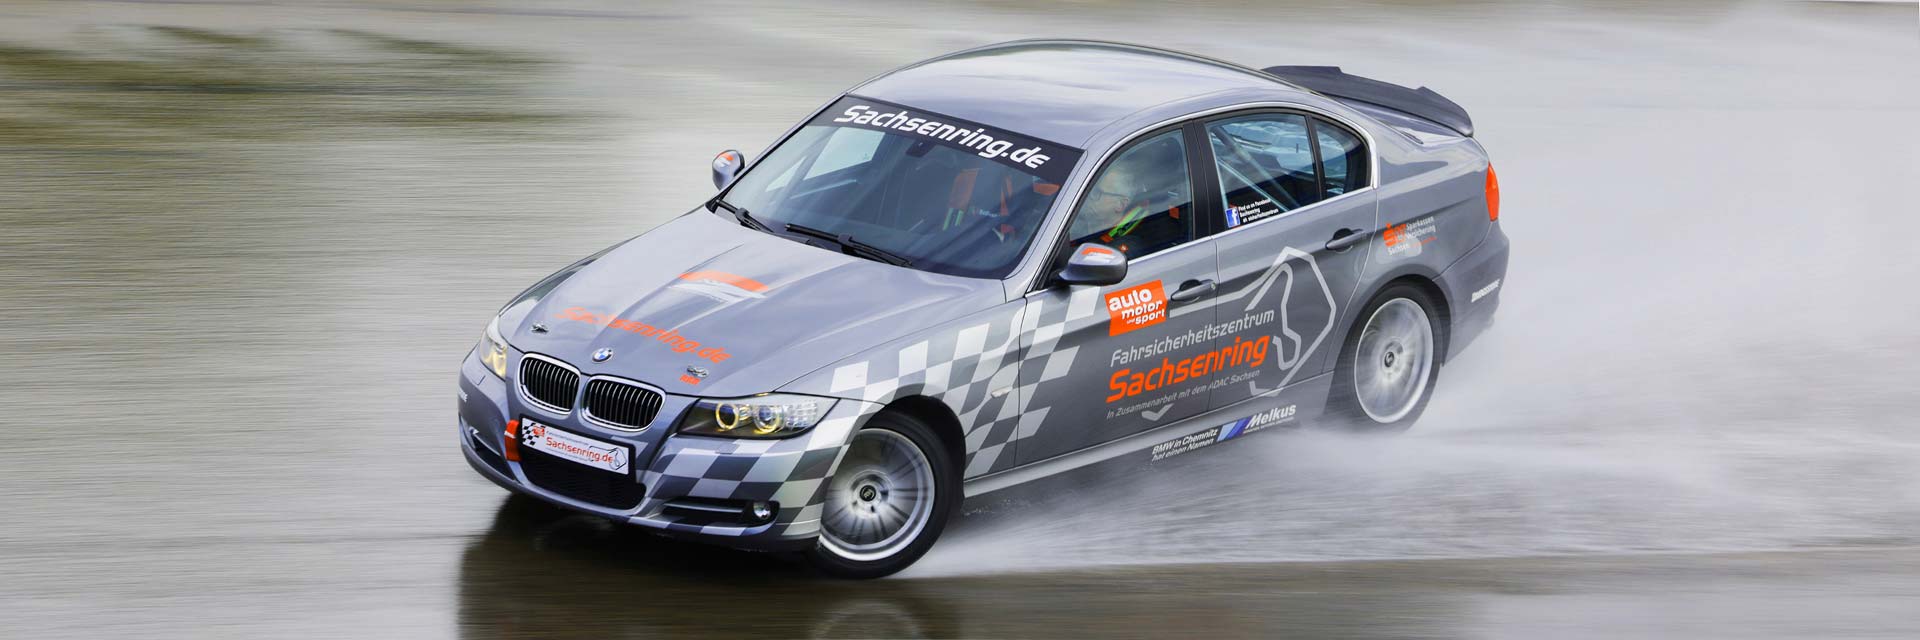 Neuser Motorsport Events - Car Control Training - Sachsenring